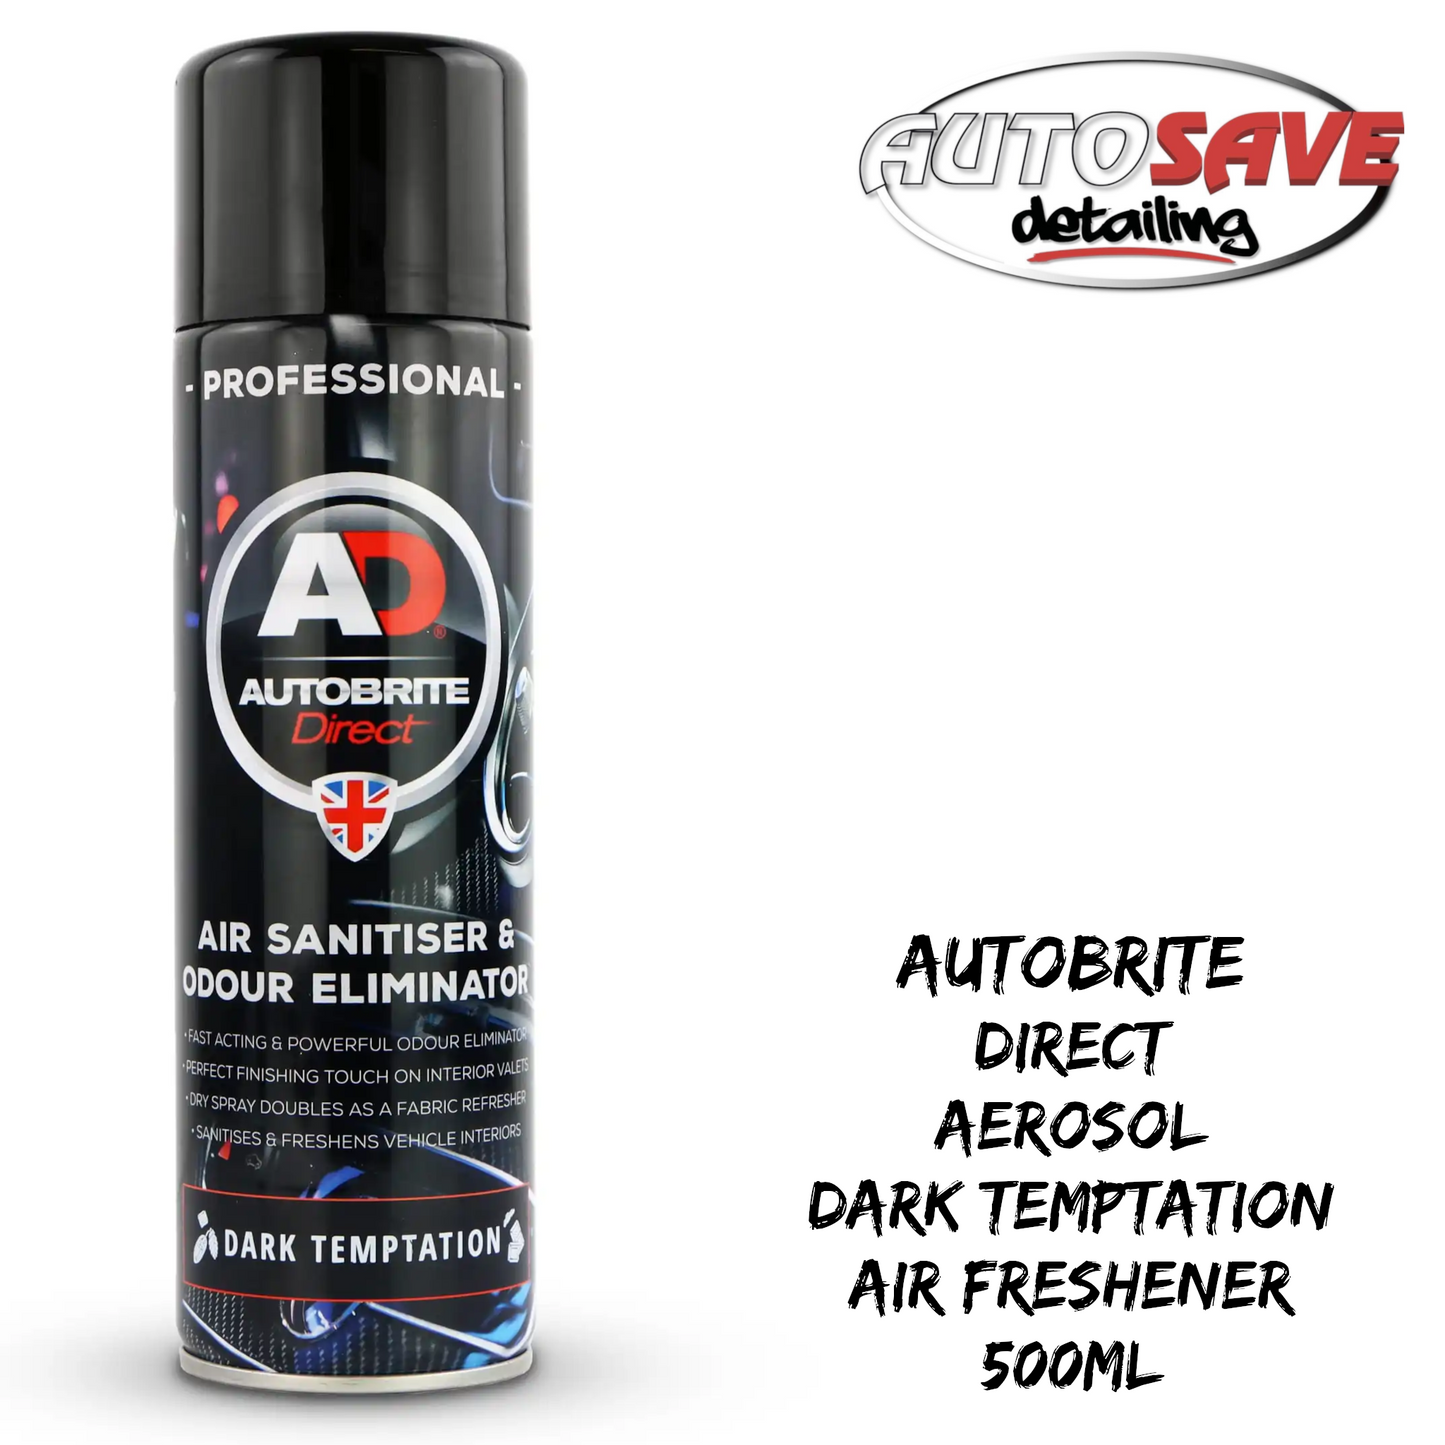 Autobrite Direct - Professional Aerosol Air Freshener x 1 Single Can Dark Temptation